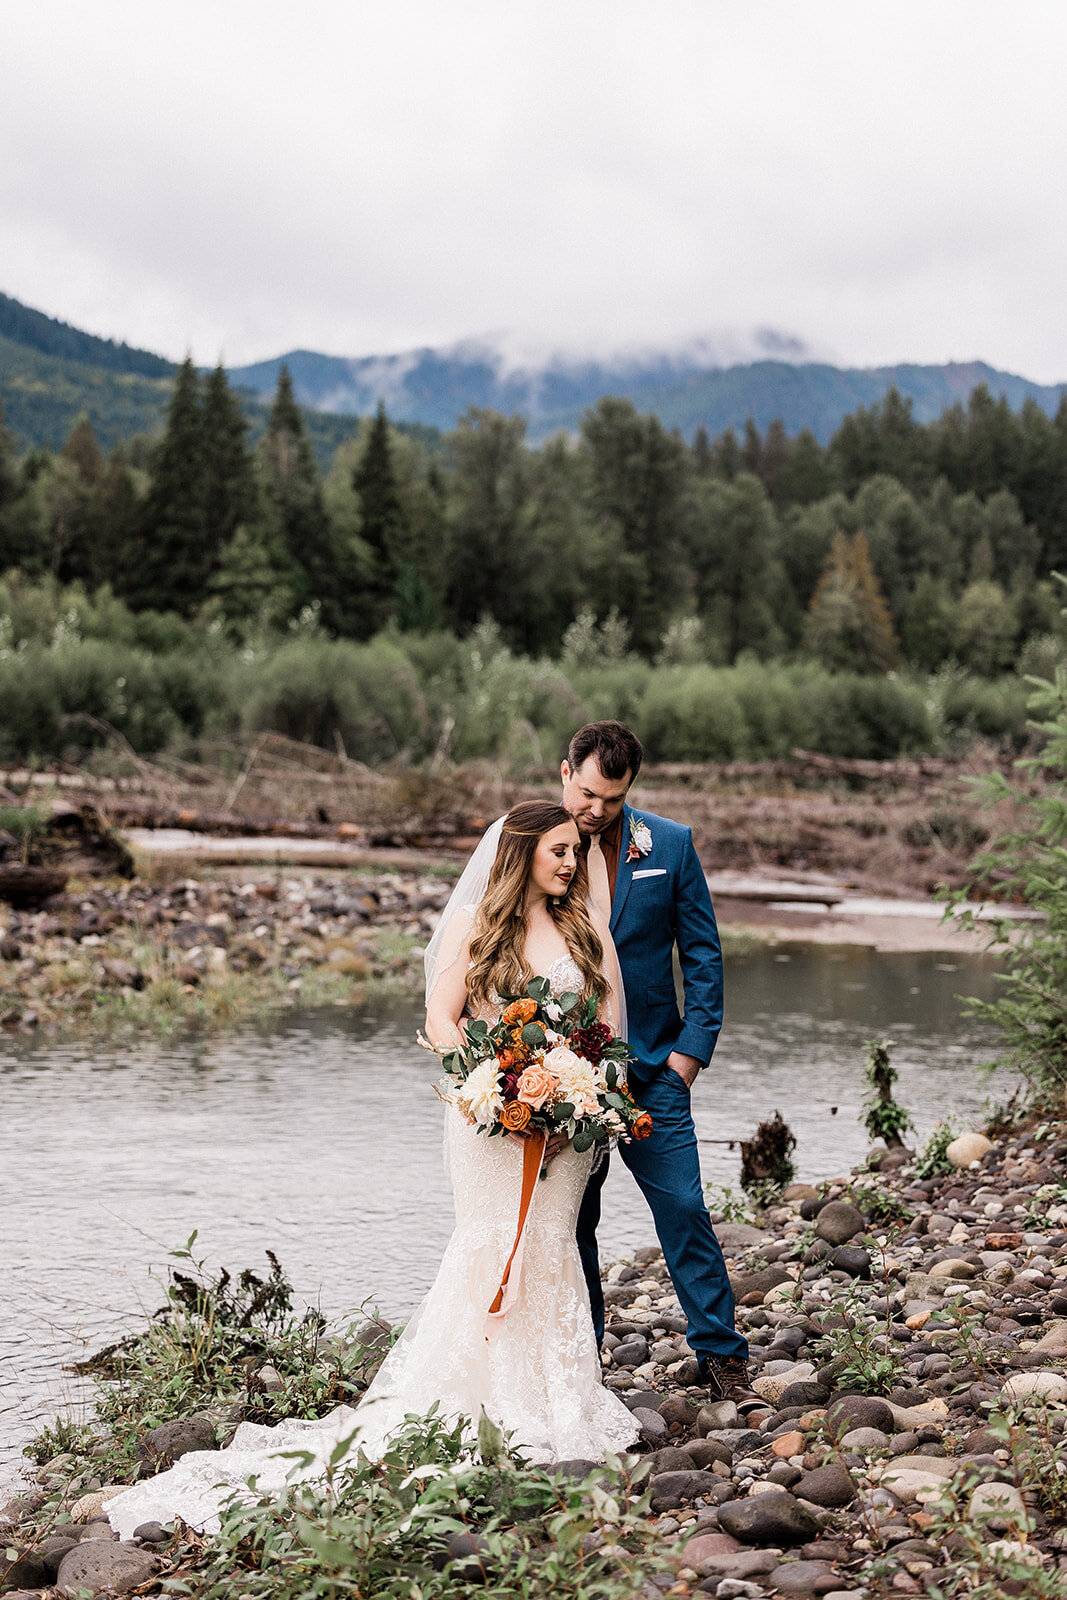 Rainy-Mount-Rainier-National-Park-Intimate-Wedding-60